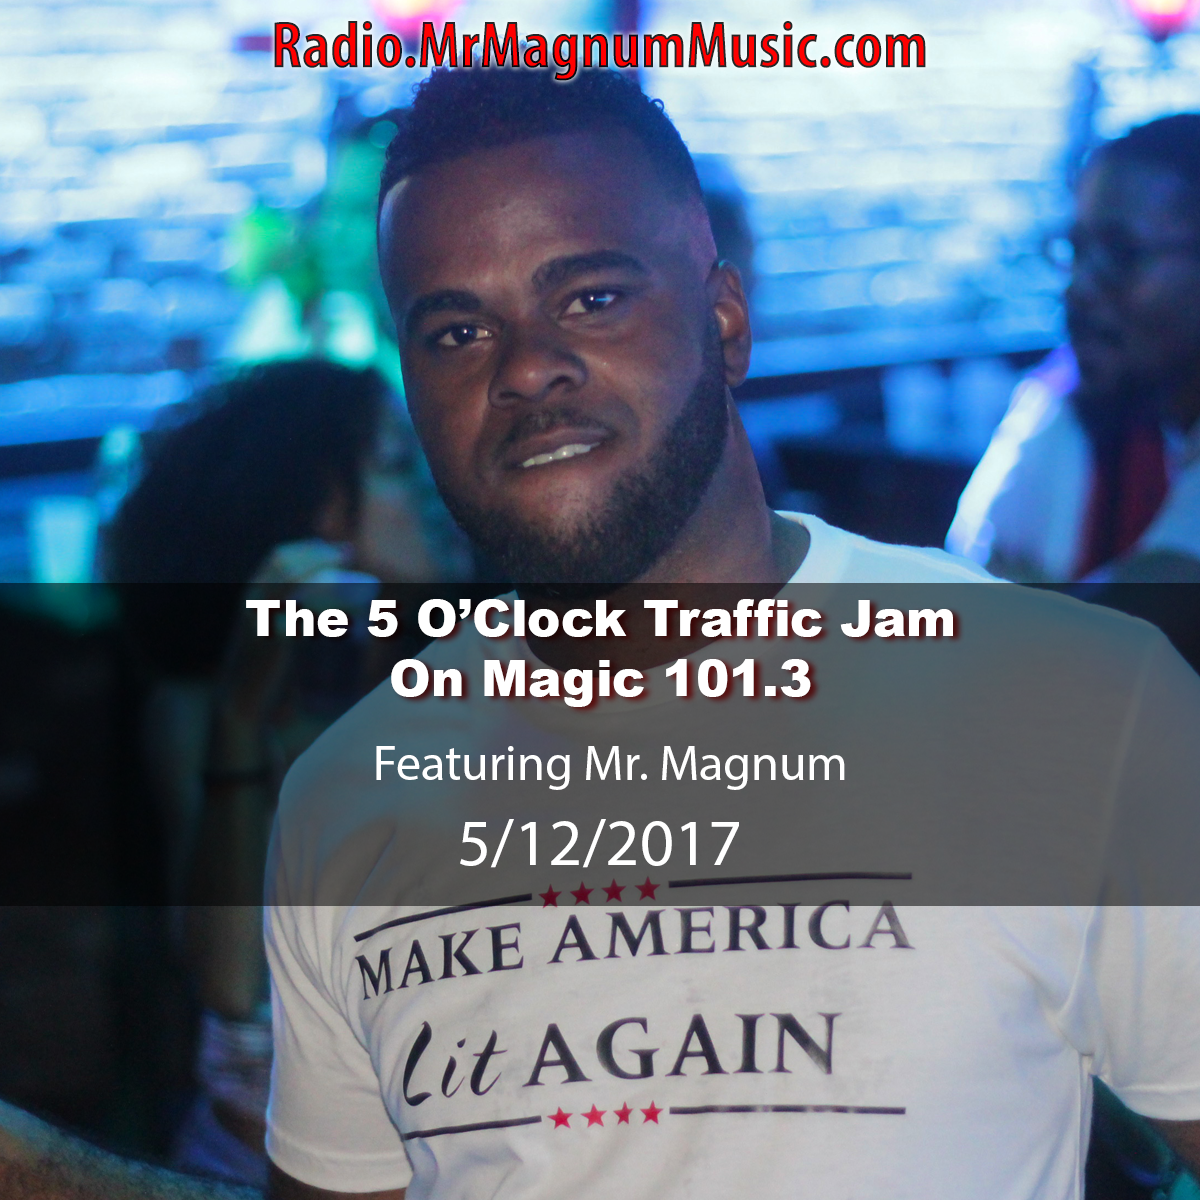 The 5 O'Clock Traffic Jam 20170512 featuring Gainesville's #1 DJ, Mr. Magnum on Magic 101.3